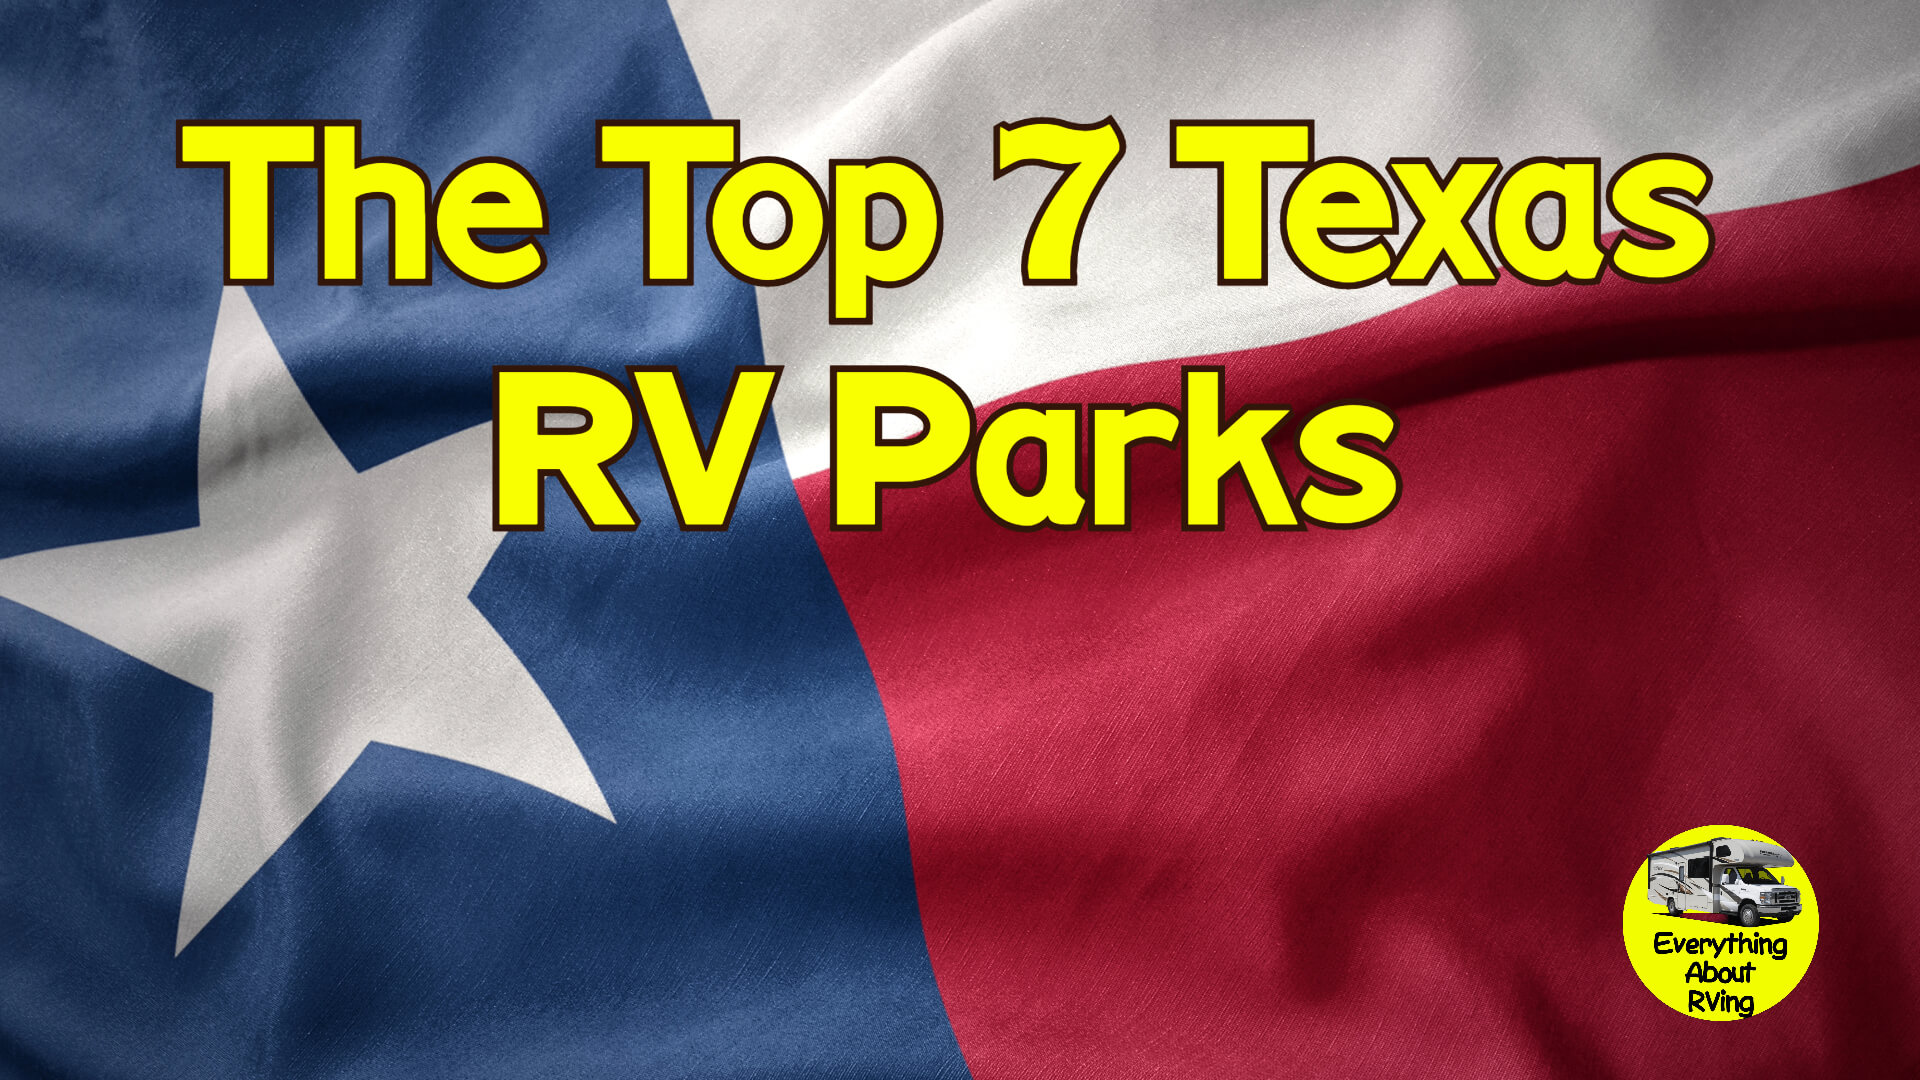 The Top 7 Texas RV Parks